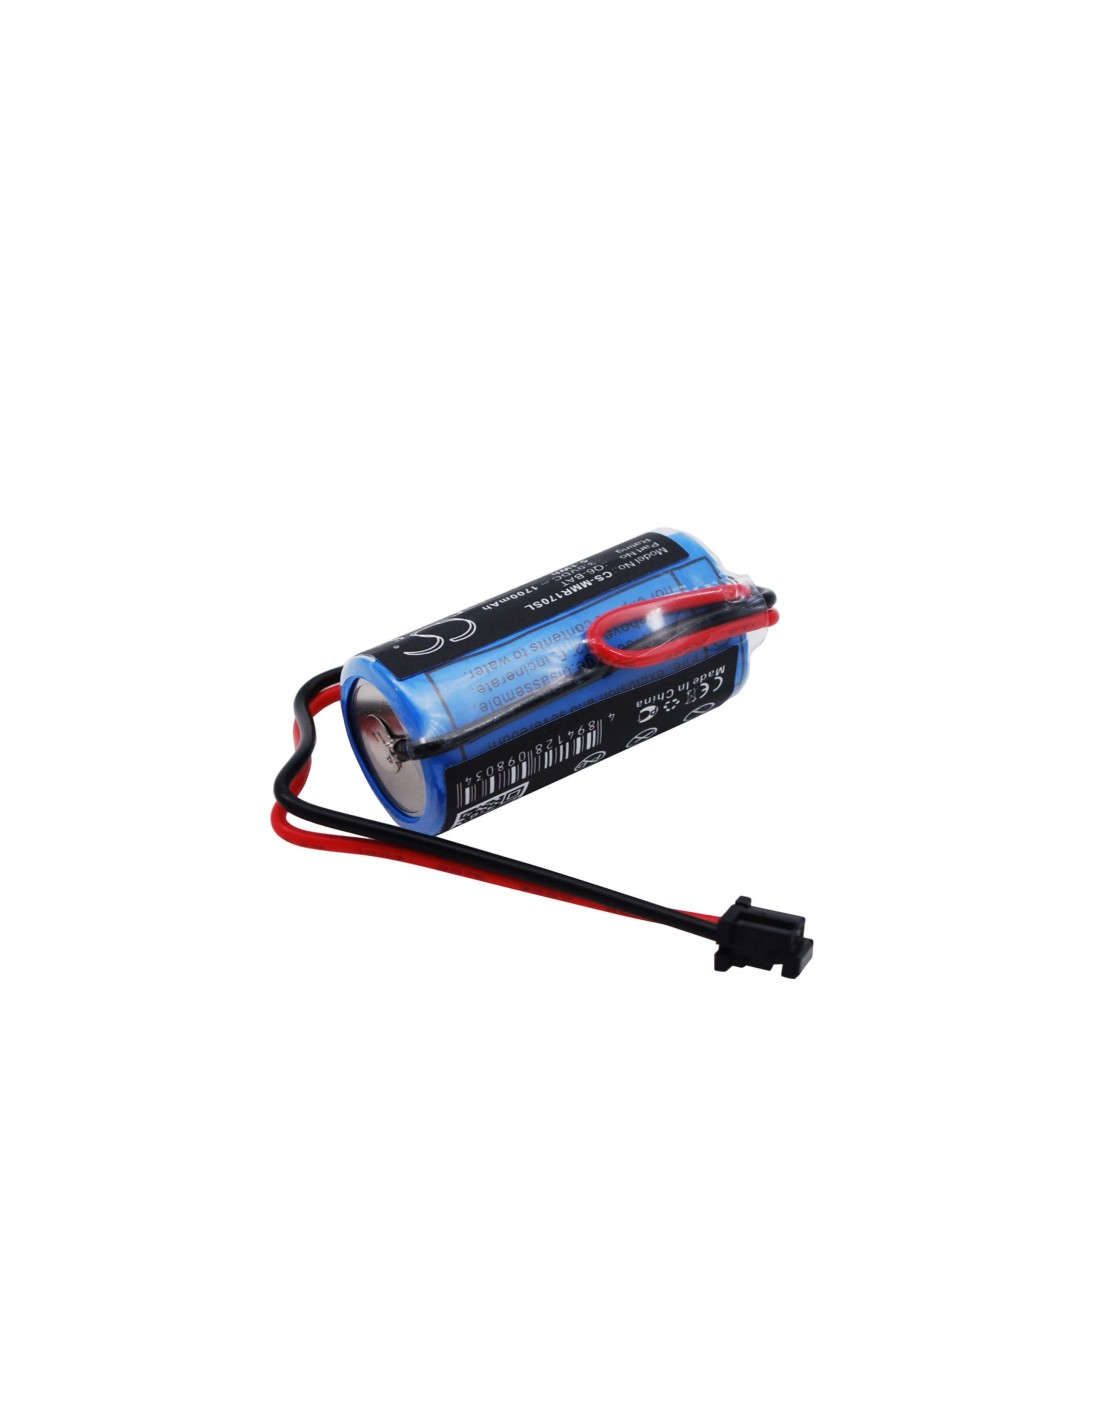 Battery for Mitsubishi Q02cpu, Q02hcpu, Q06hcpu 3.0V, 1700mAh - 5.10Wh